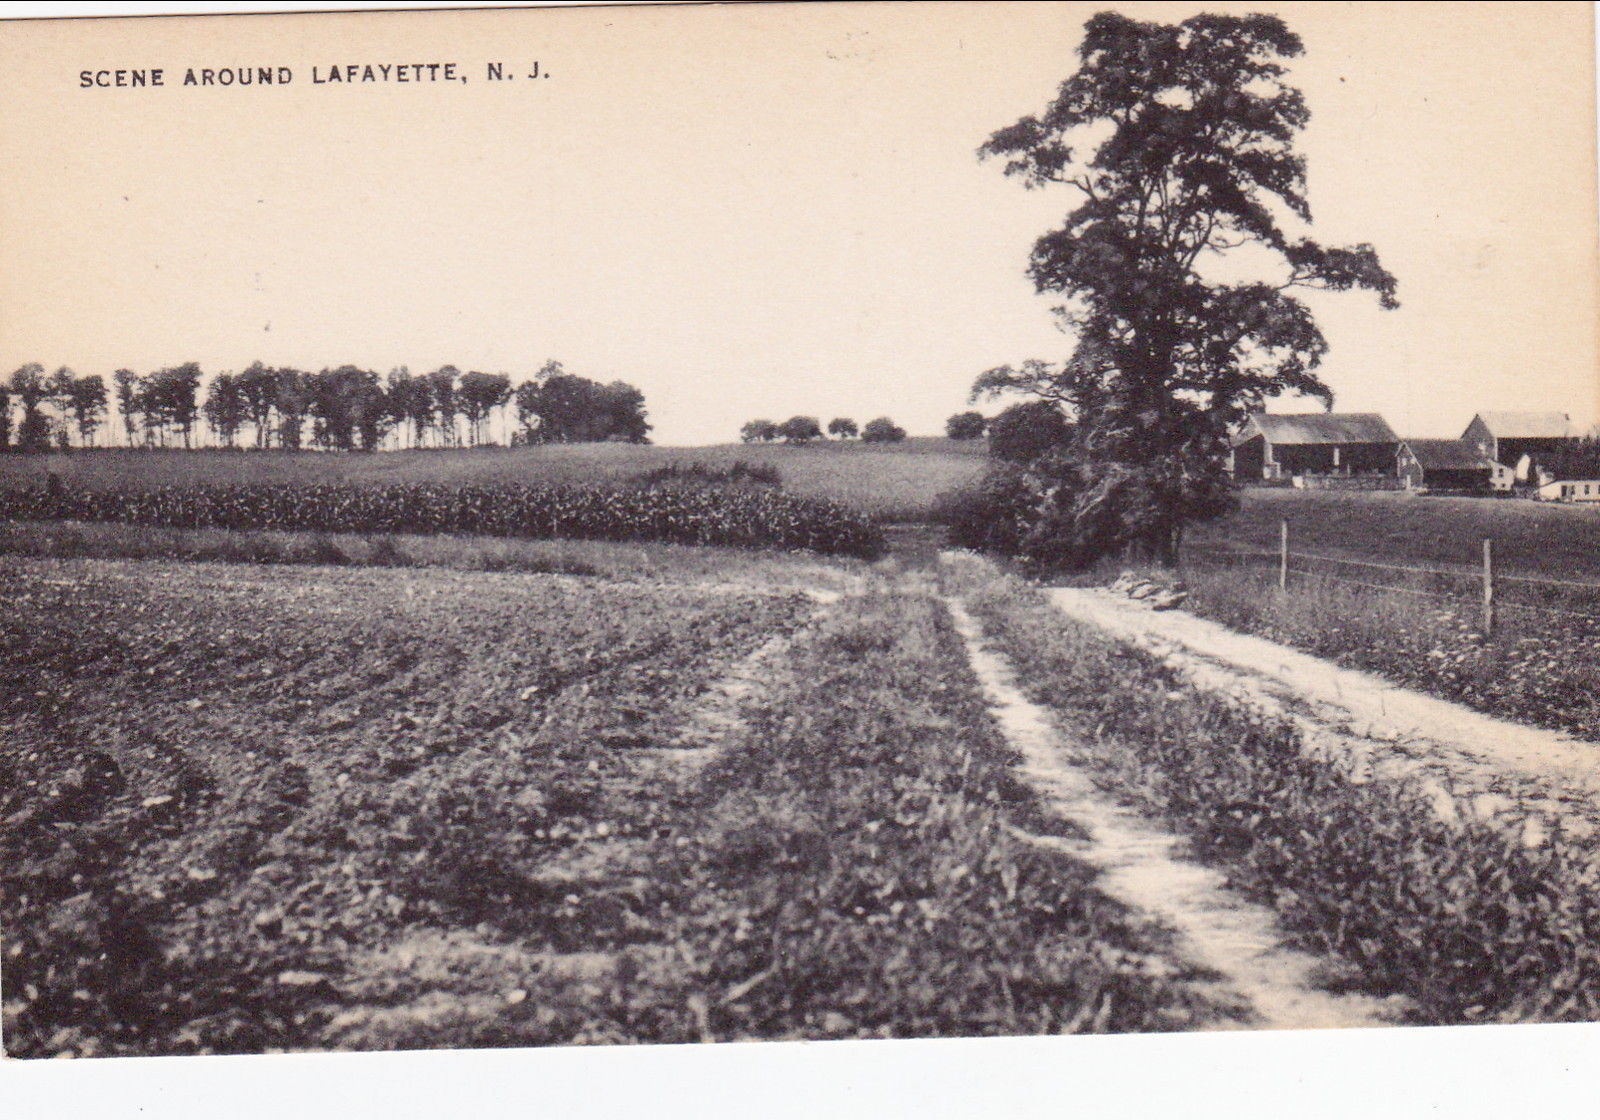 lafayette - scene on a corn farm - 1930s